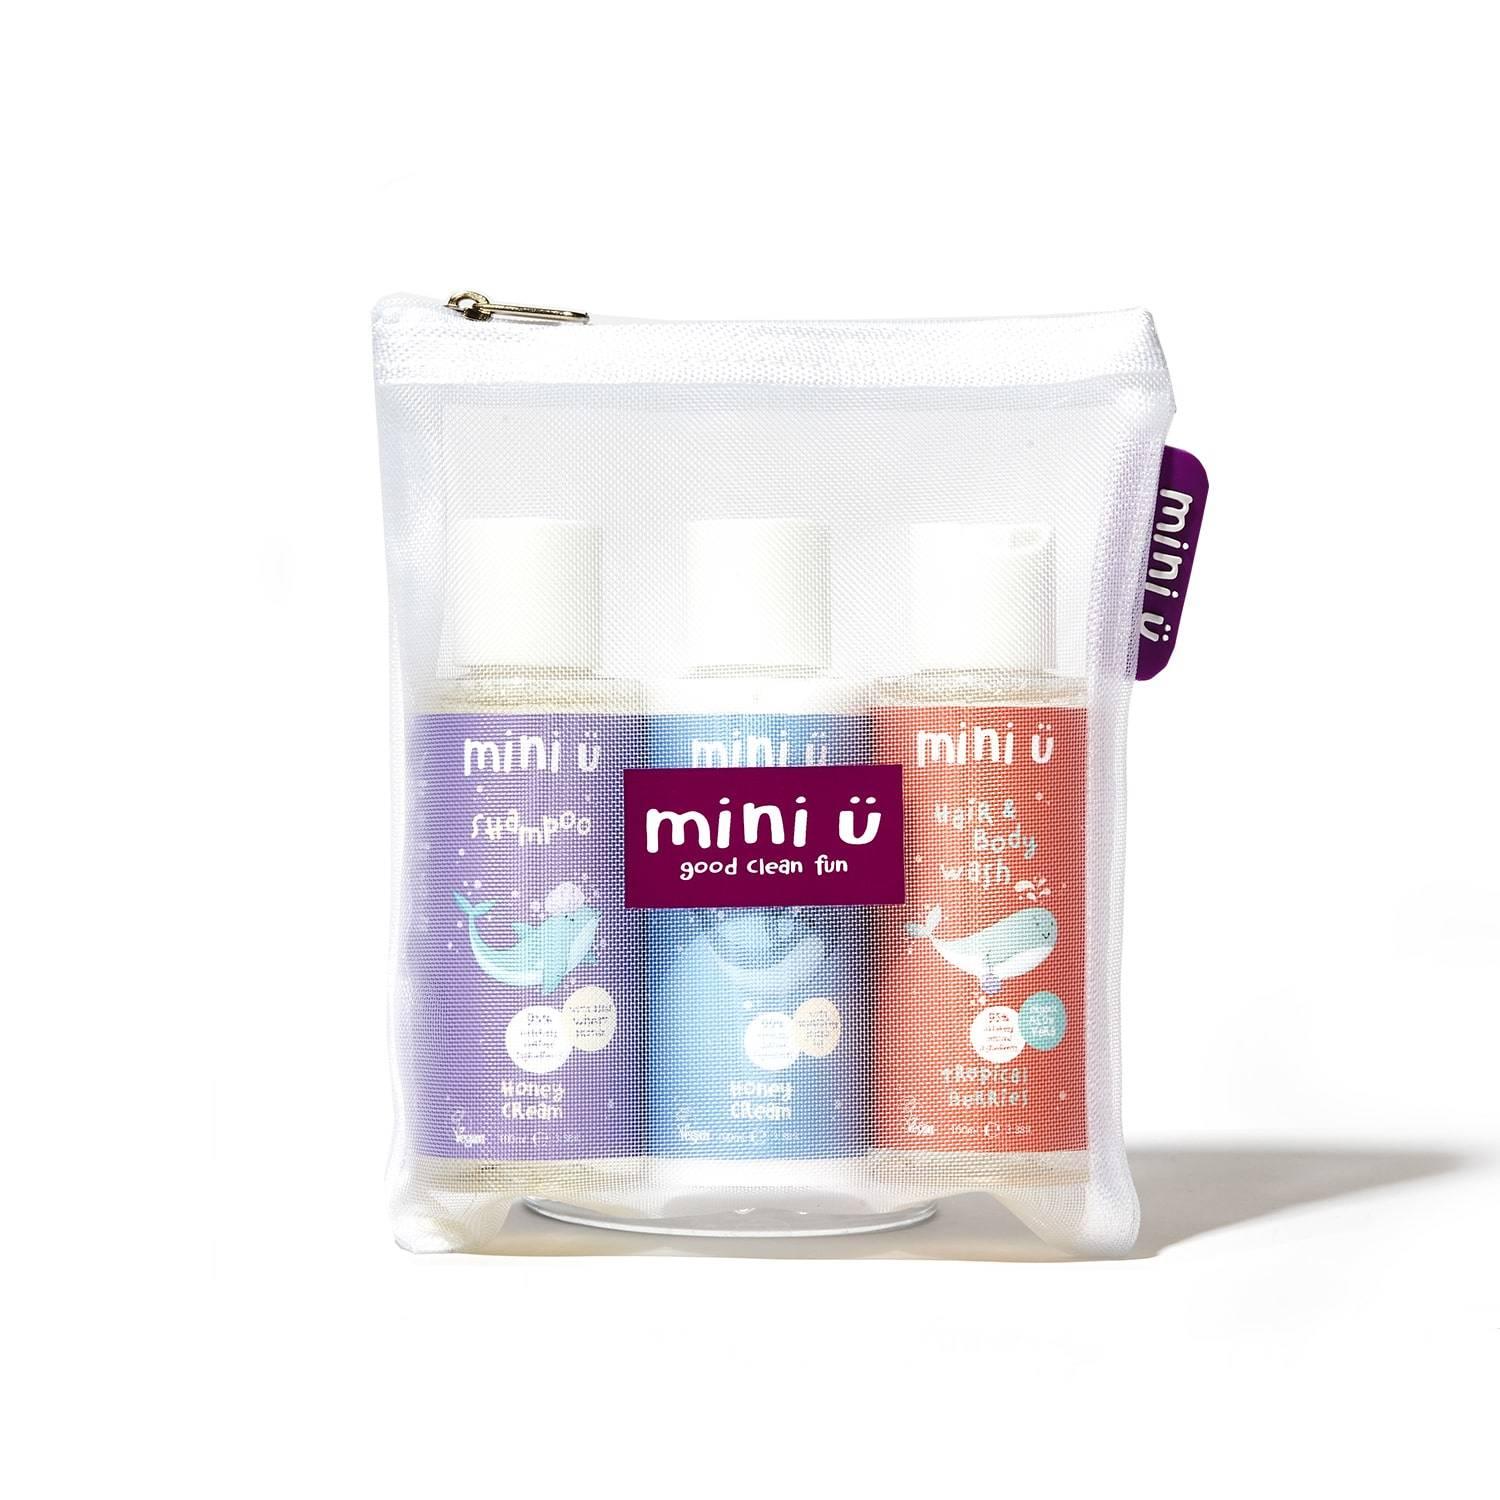 Mini-U: Travel Size cosmetics set